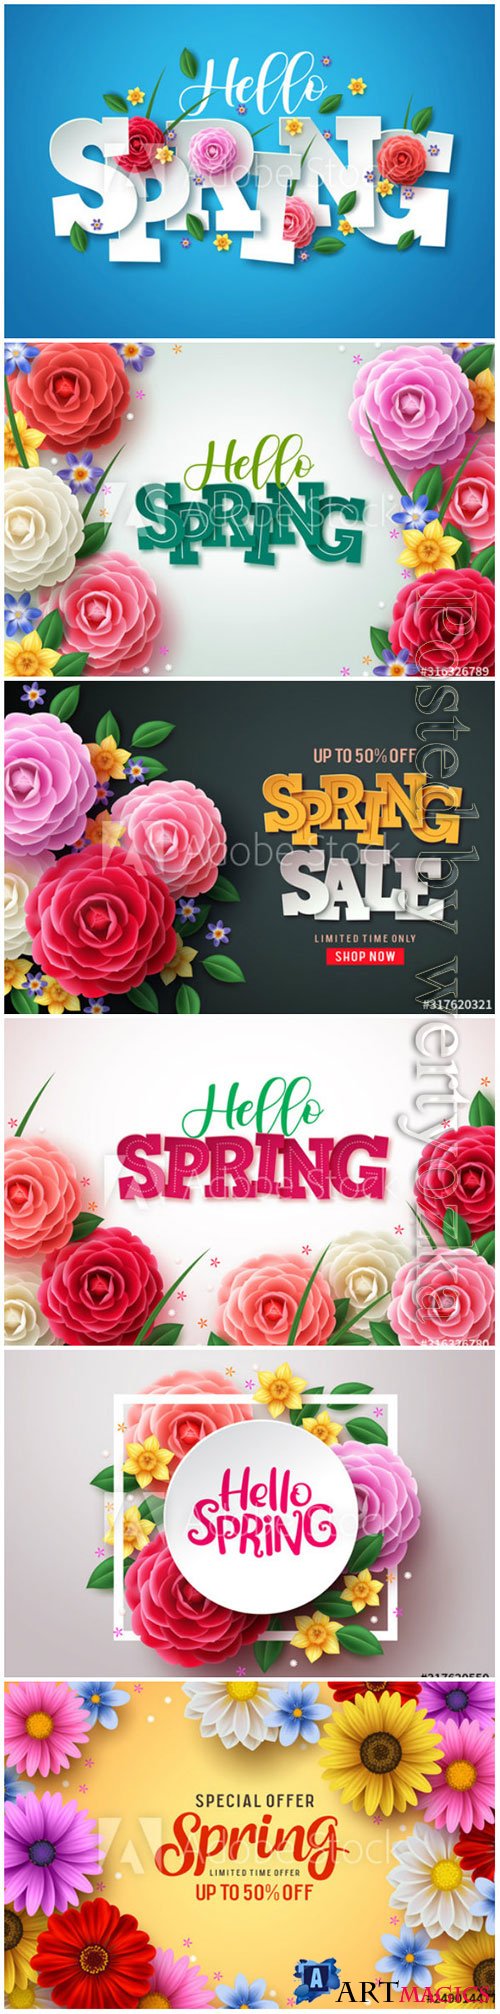 Spring special offer vector banner background